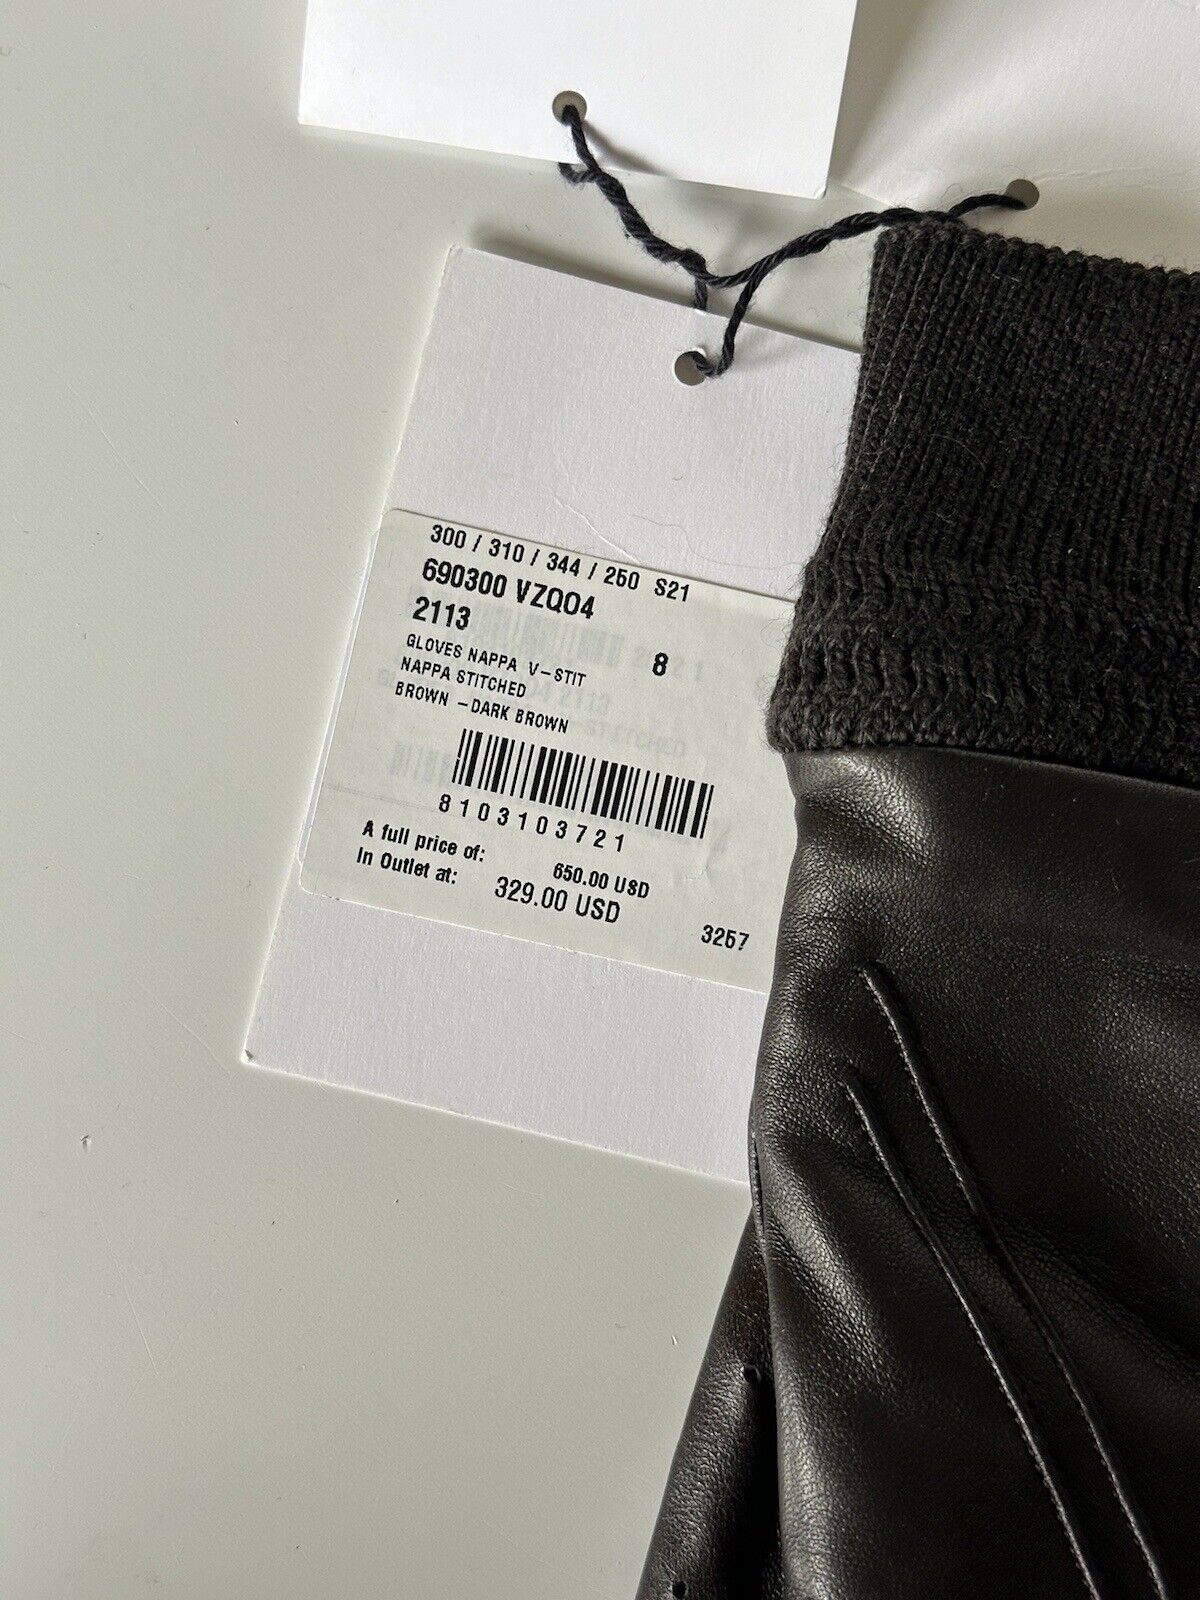 Neu mit Etikett: 650 $ Bottega Veneta Damen-Lederhandschuhe Braun Größe 8 (L) Italien 690300 